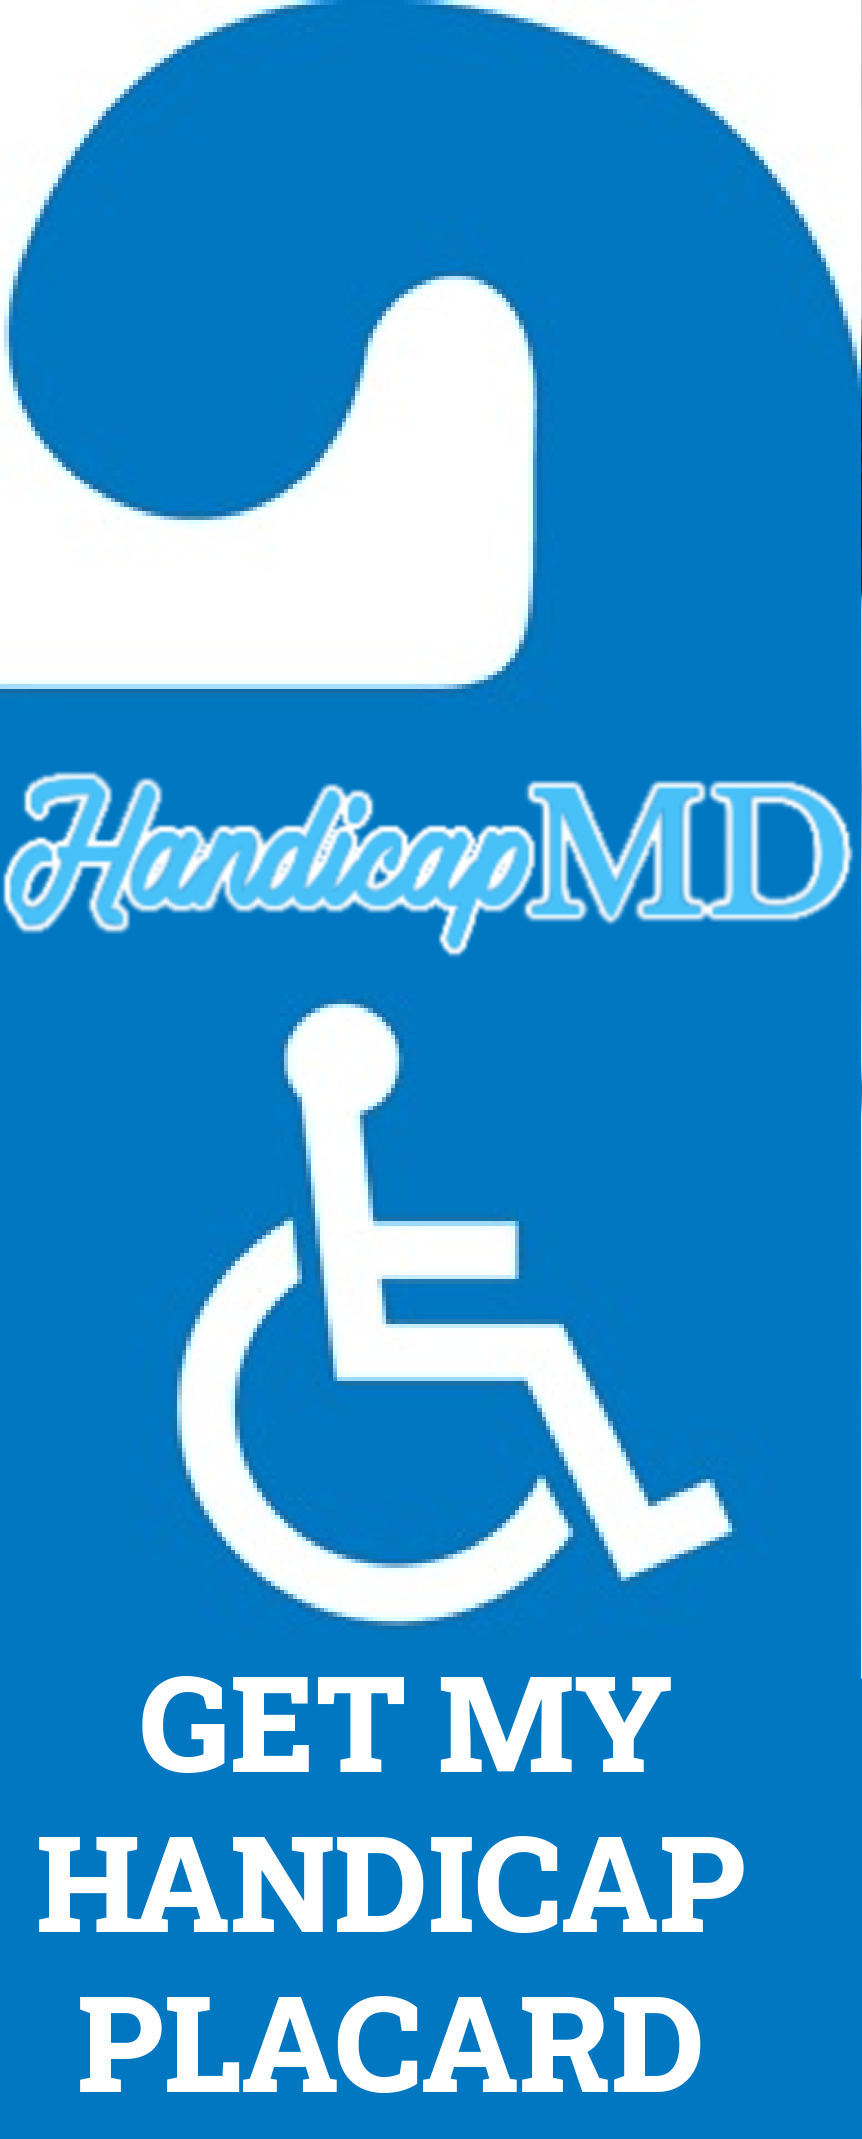 Get a Handicap Parking Placard in Illinois